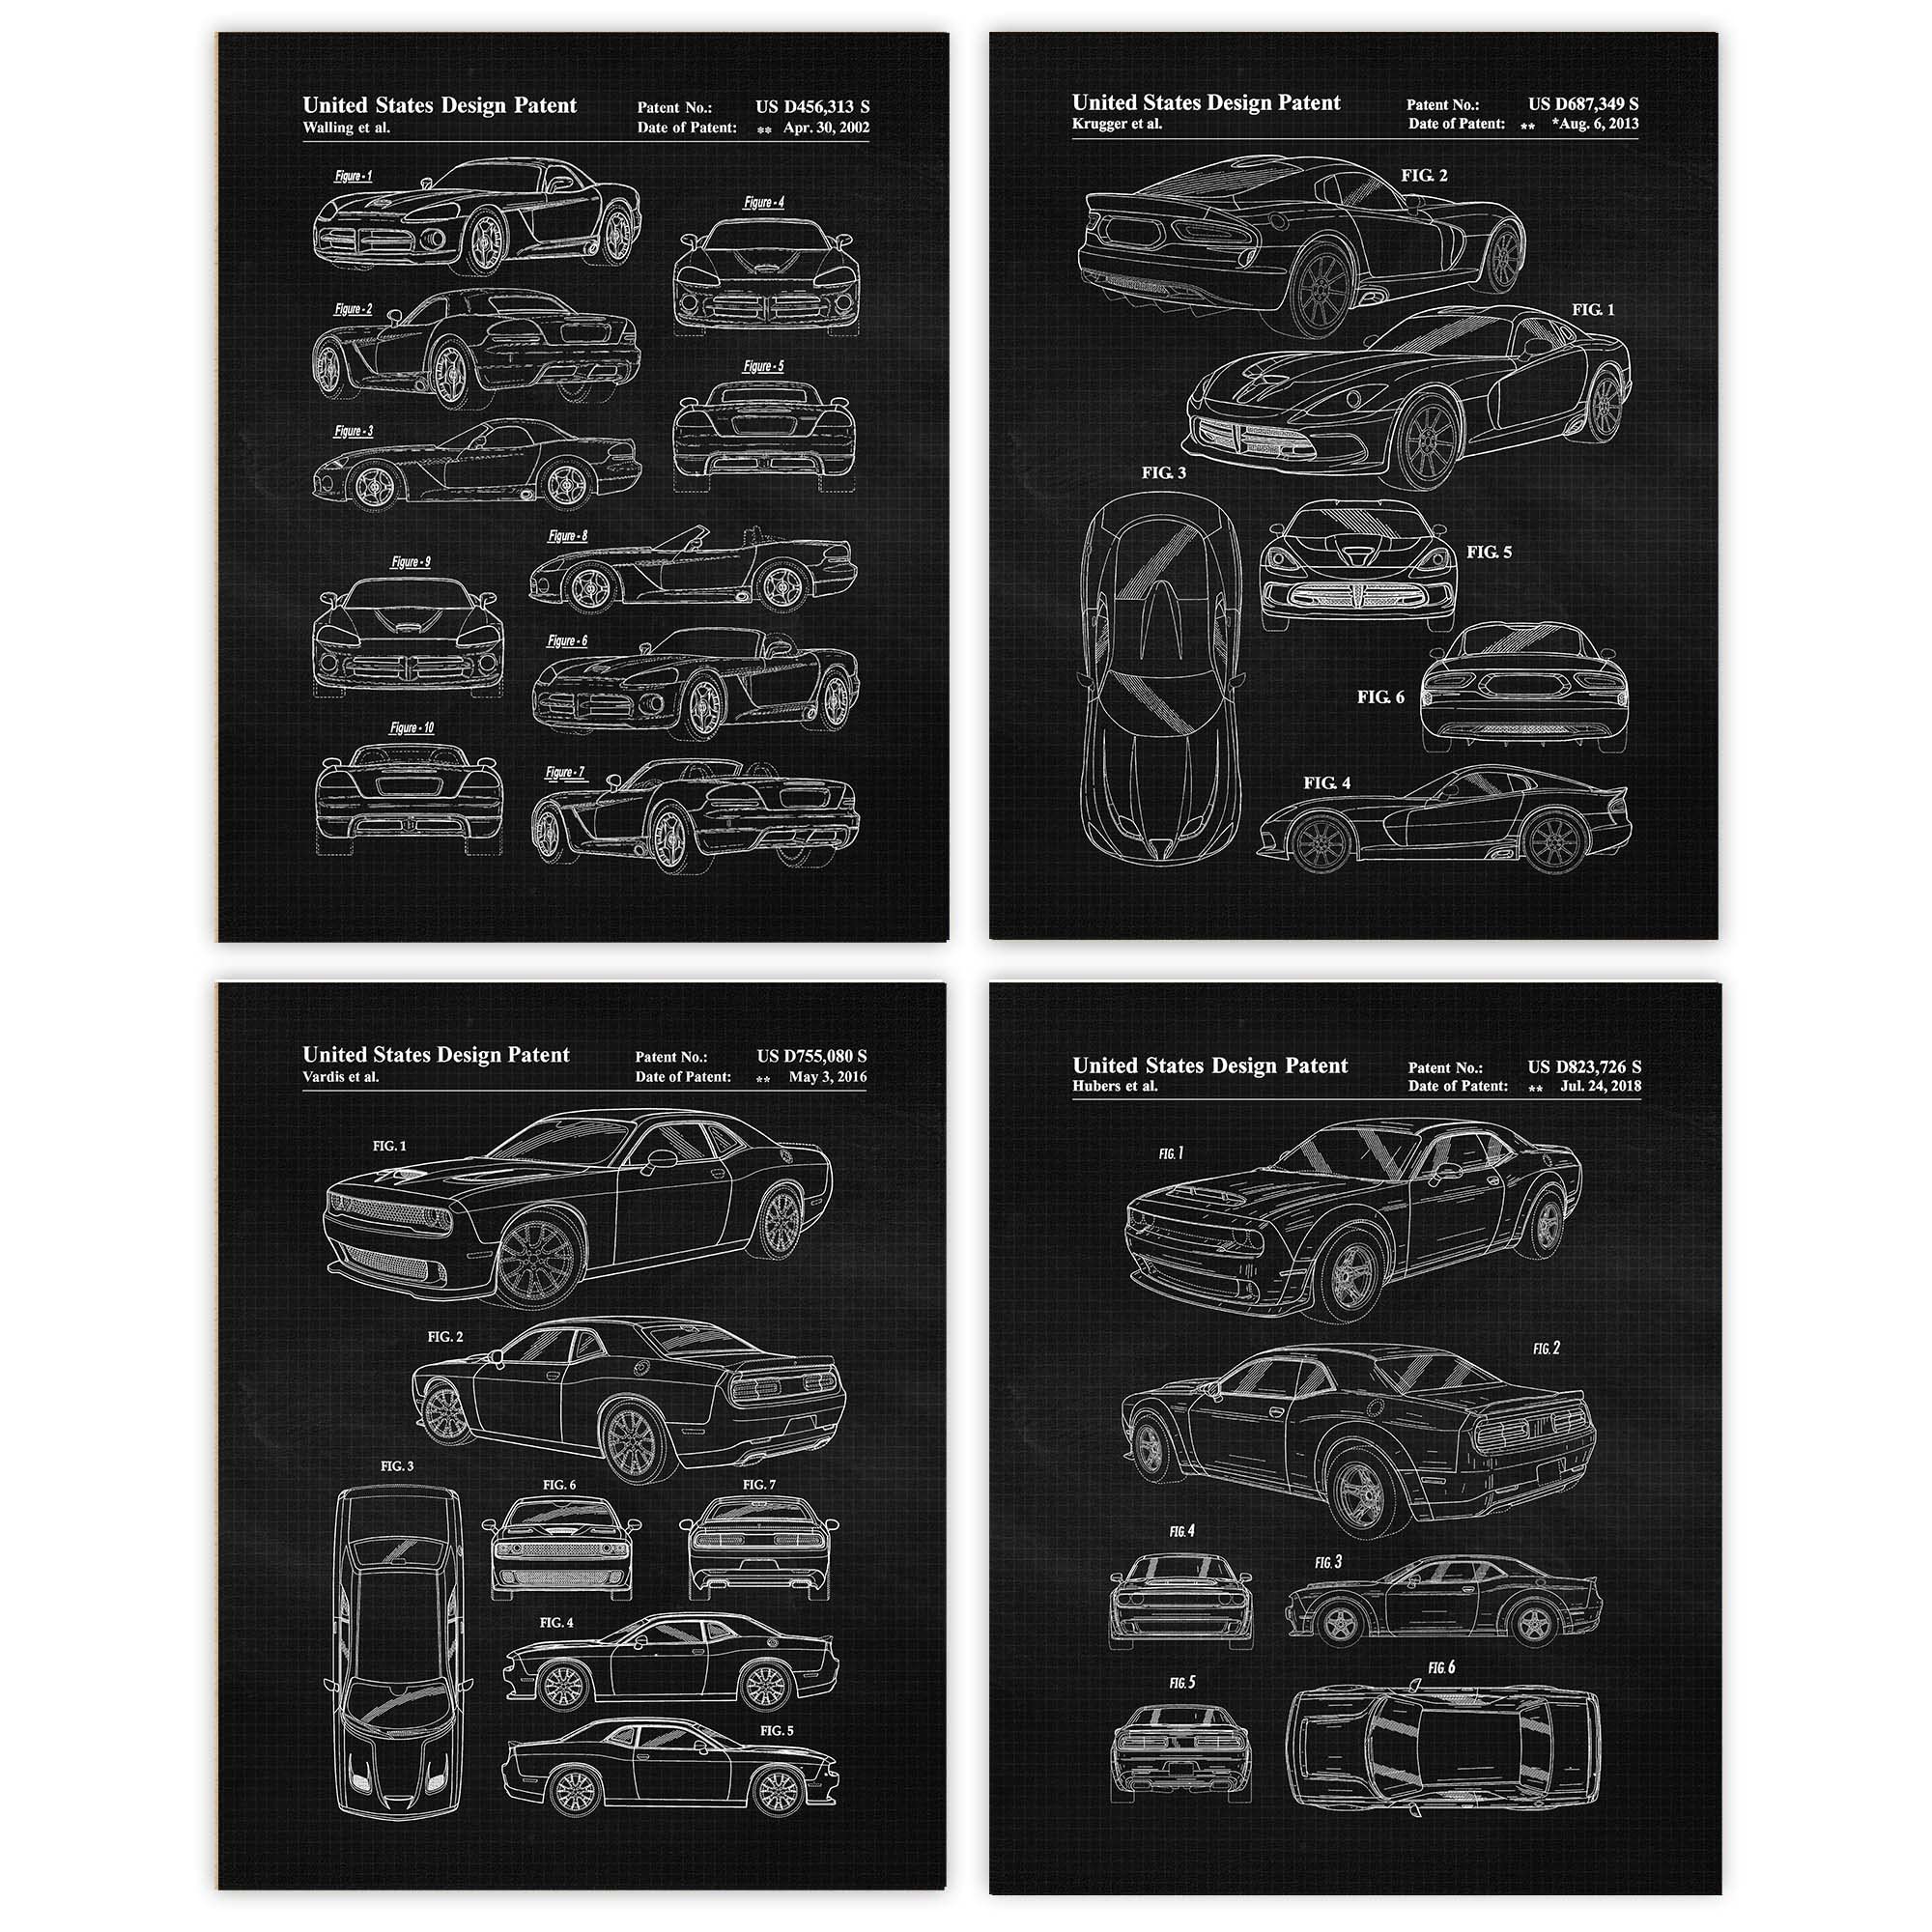 Vintage Dodge Viper Hellcat Demon Auto Patent Prints, 4 (8x10) Unframed Photos, Wall Art Decor Gifts Under 20 for Home Office Man Cave Engine Garage Shop School Student Teacher Coach MOPAR Sports Cars